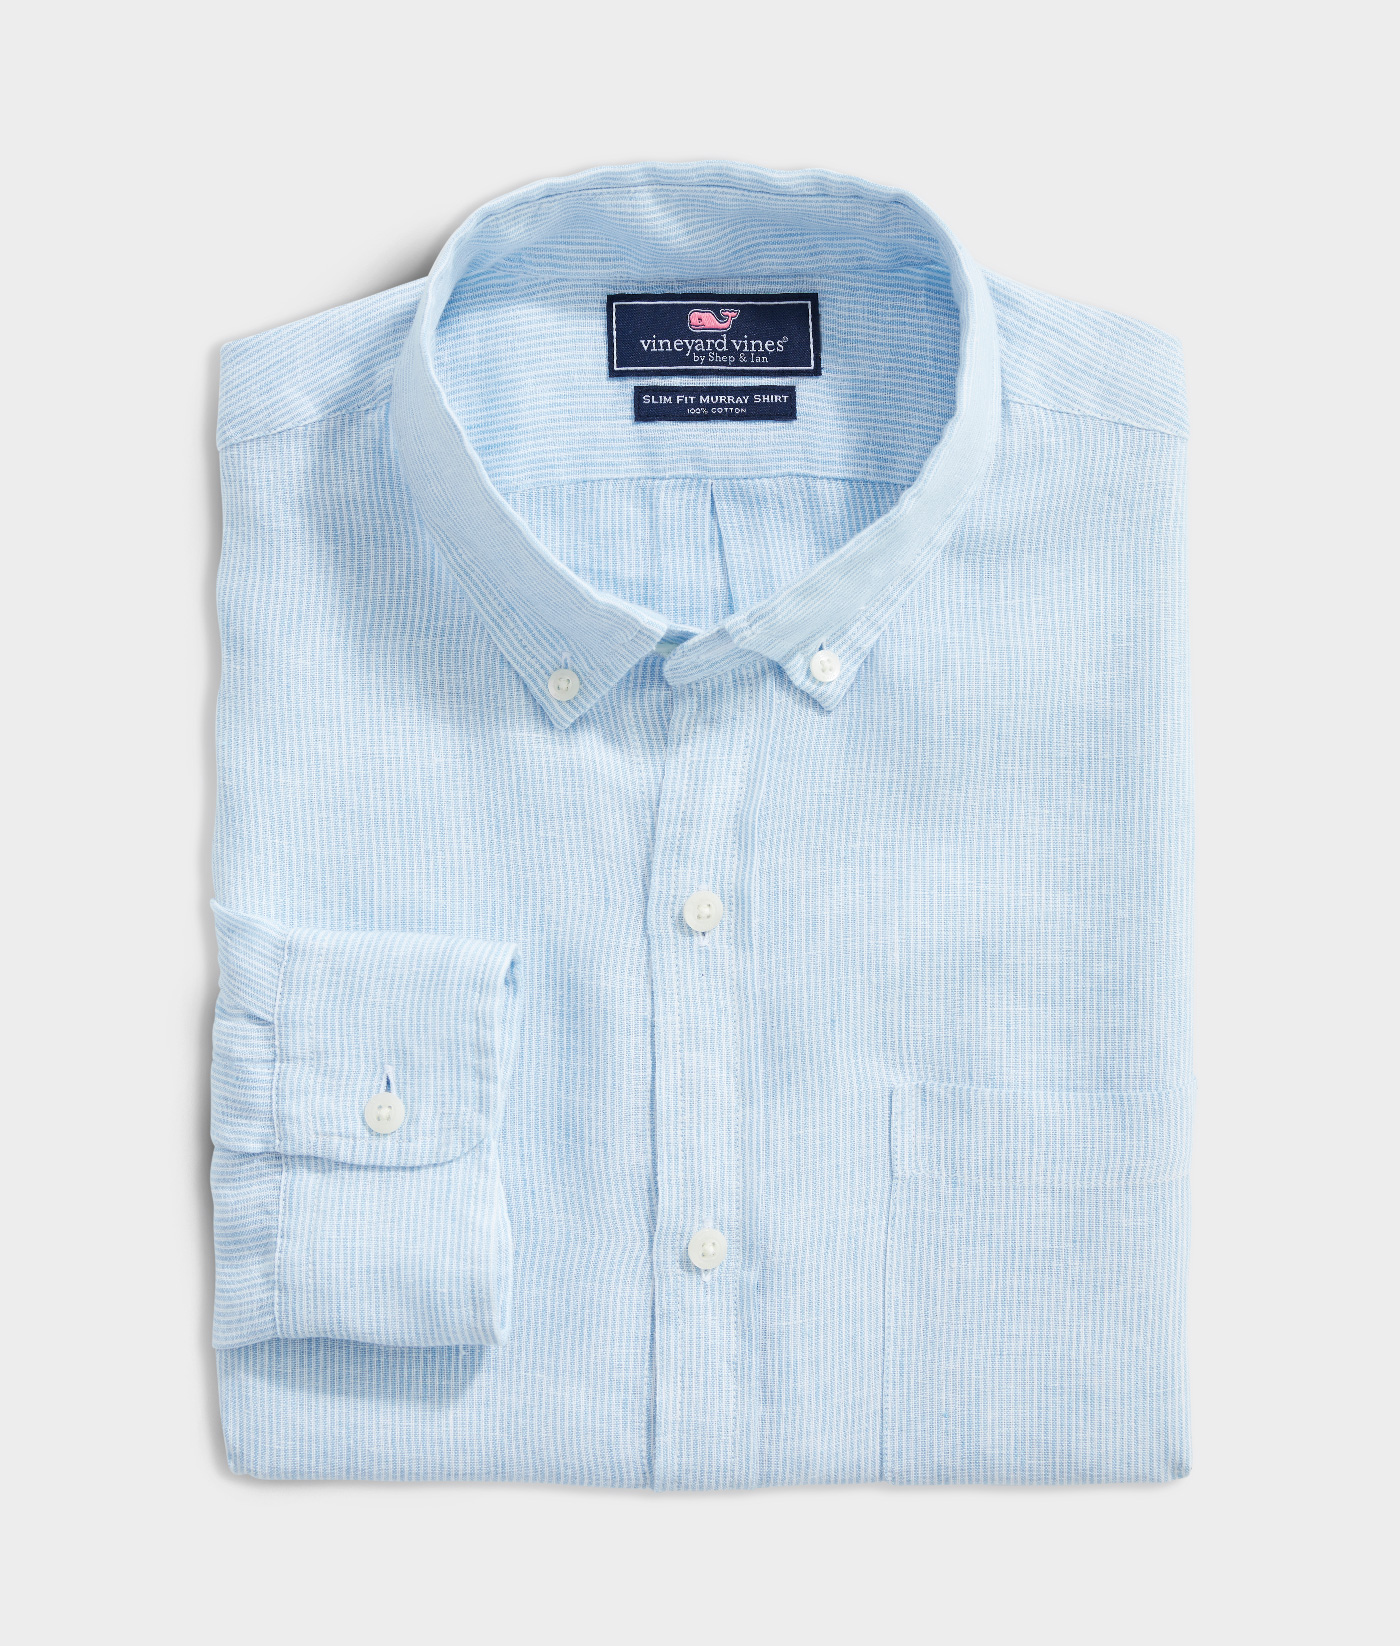 Shop Slim Fit Paradise Linen Murray Button-Down Shirt at vineyard vines